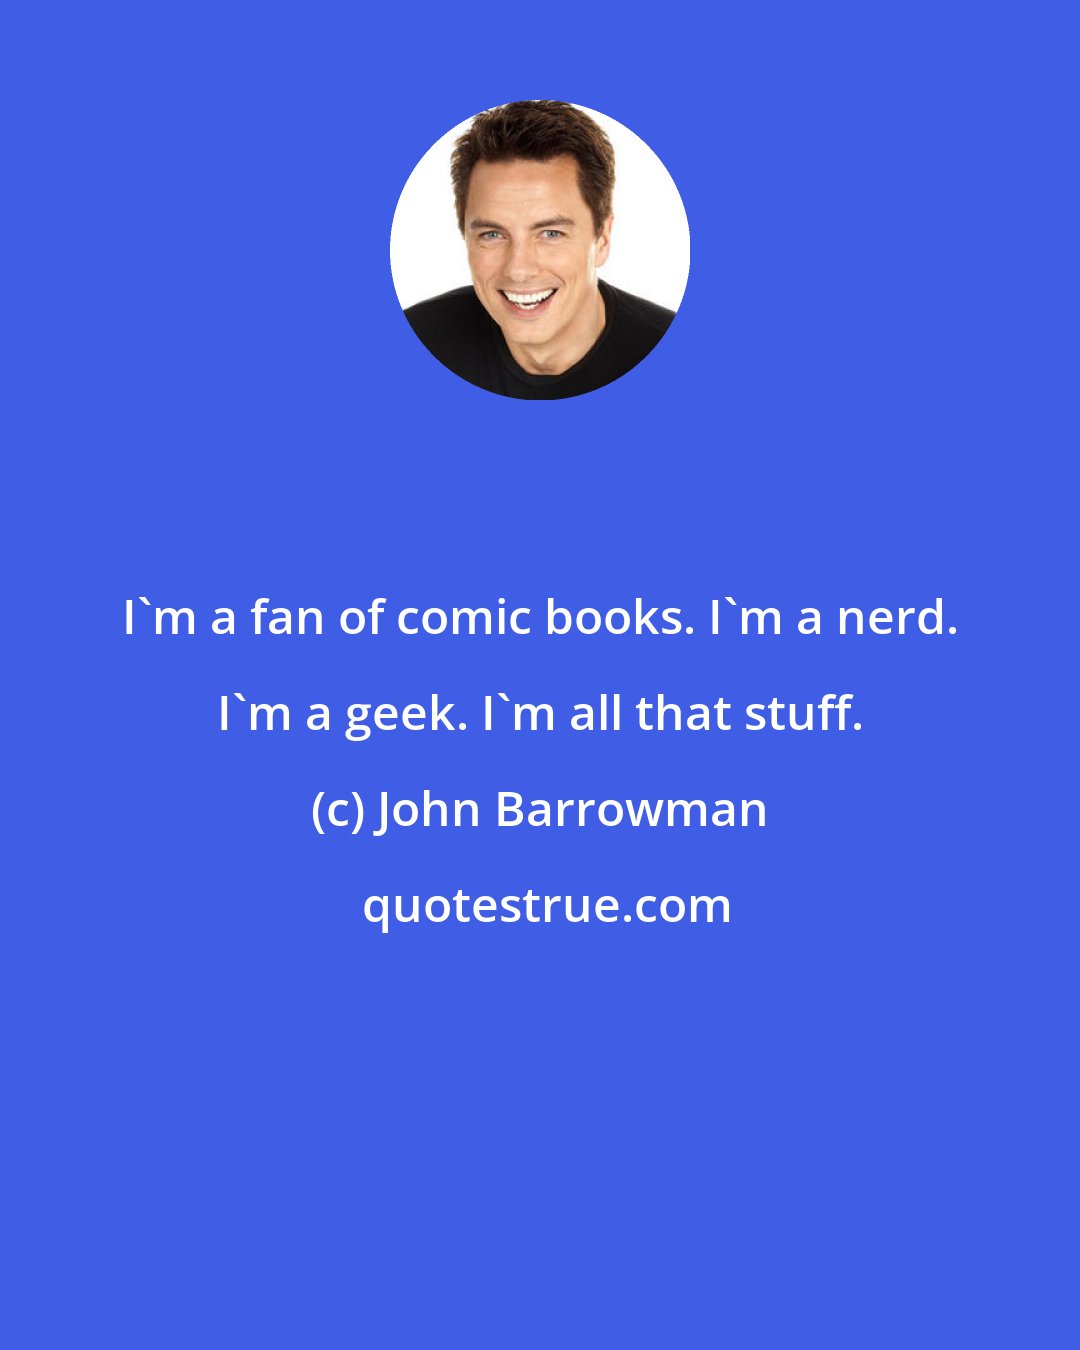 John Barrowman: I'm a fan of comic books. I'm a nerd. I'm a geek. I'm all that stuff.